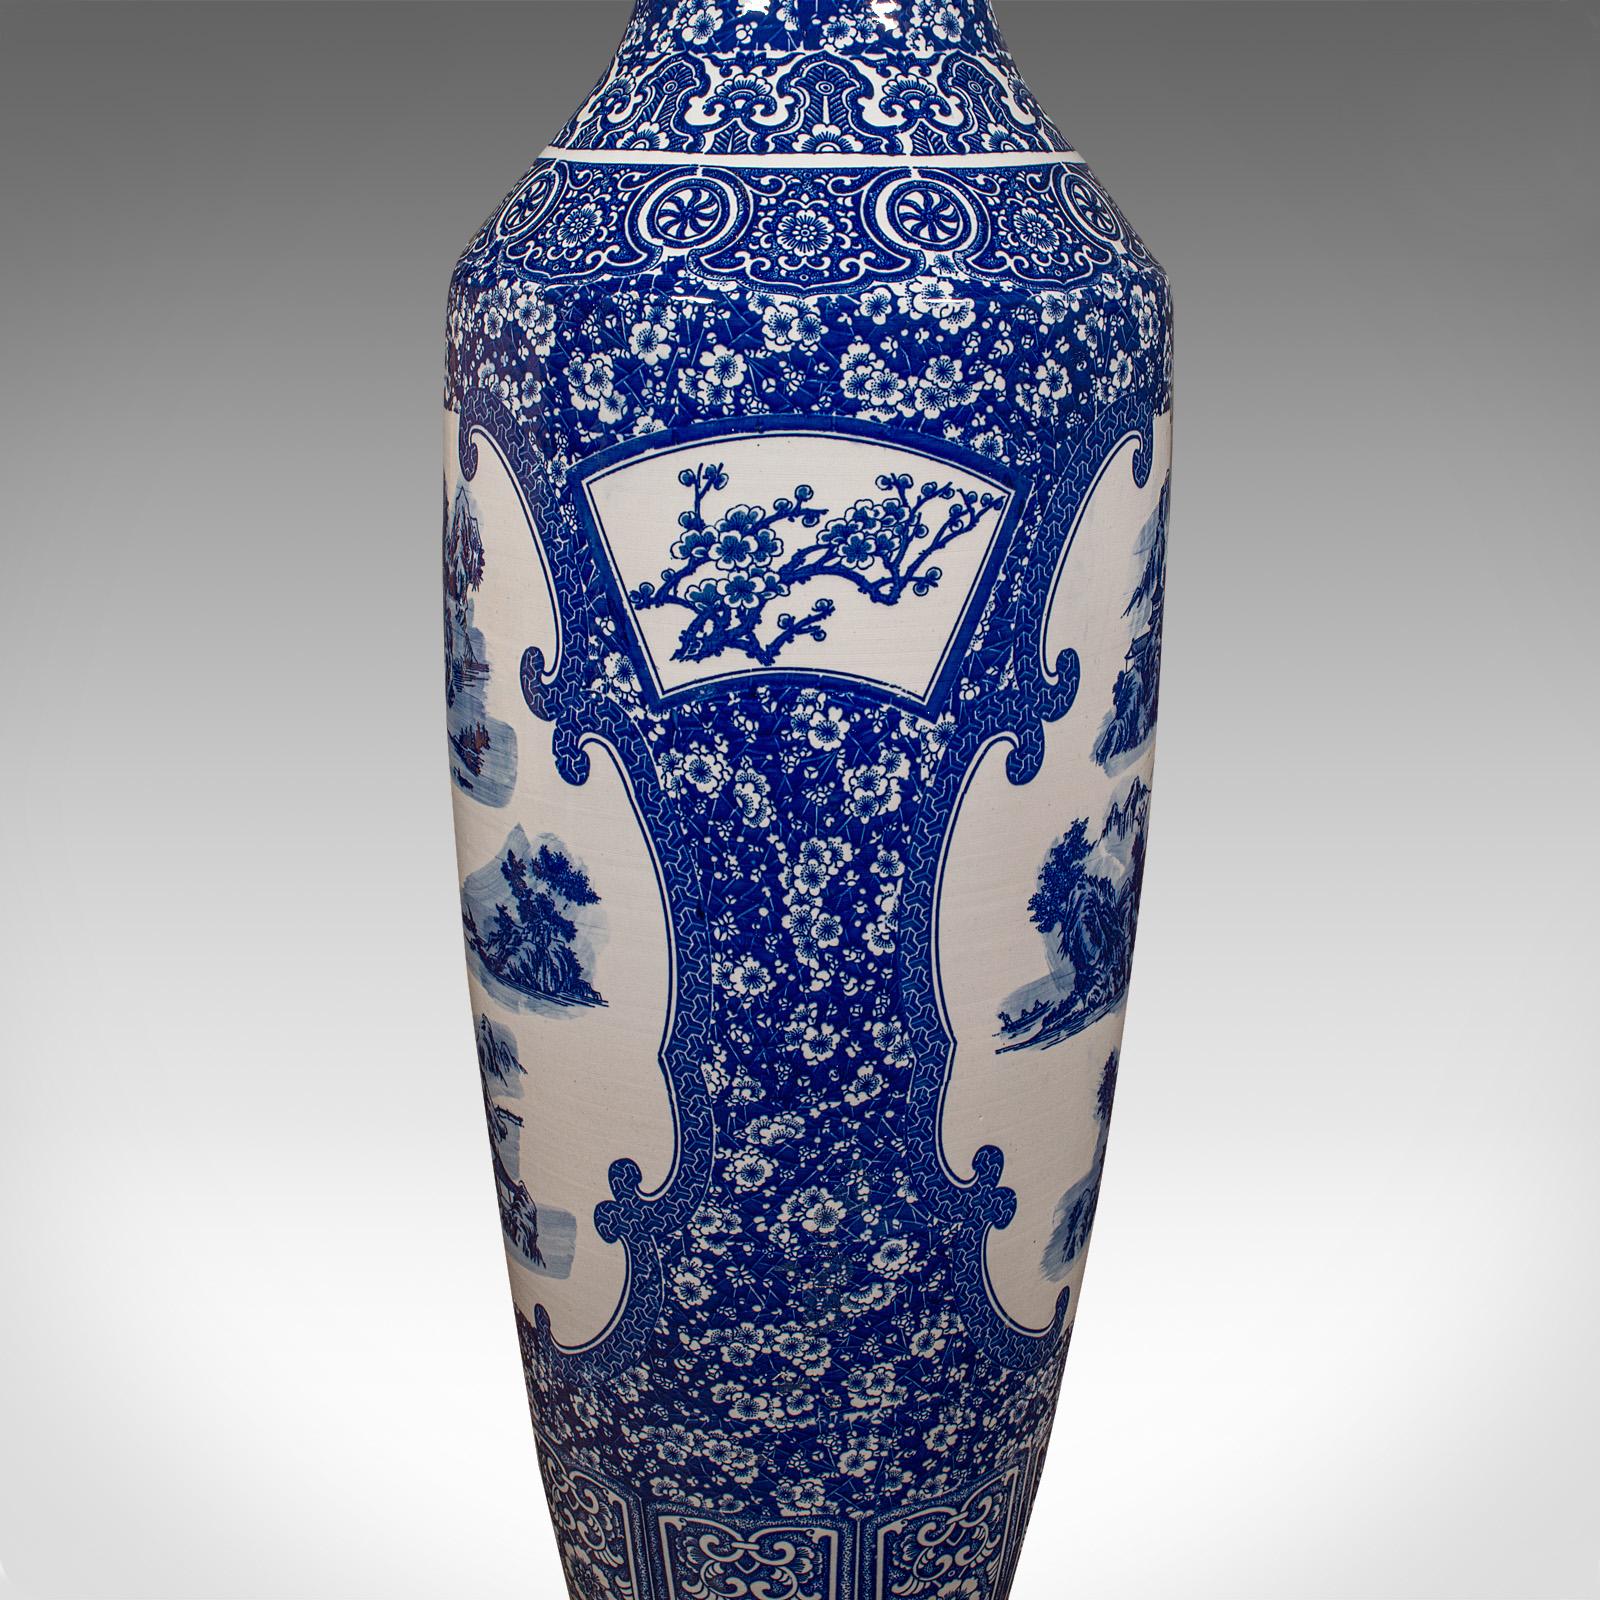 4' Tall Vintage Floor Vase, Chinese, Blue & White, Ceramic, Display, Art Deco For Sale 7